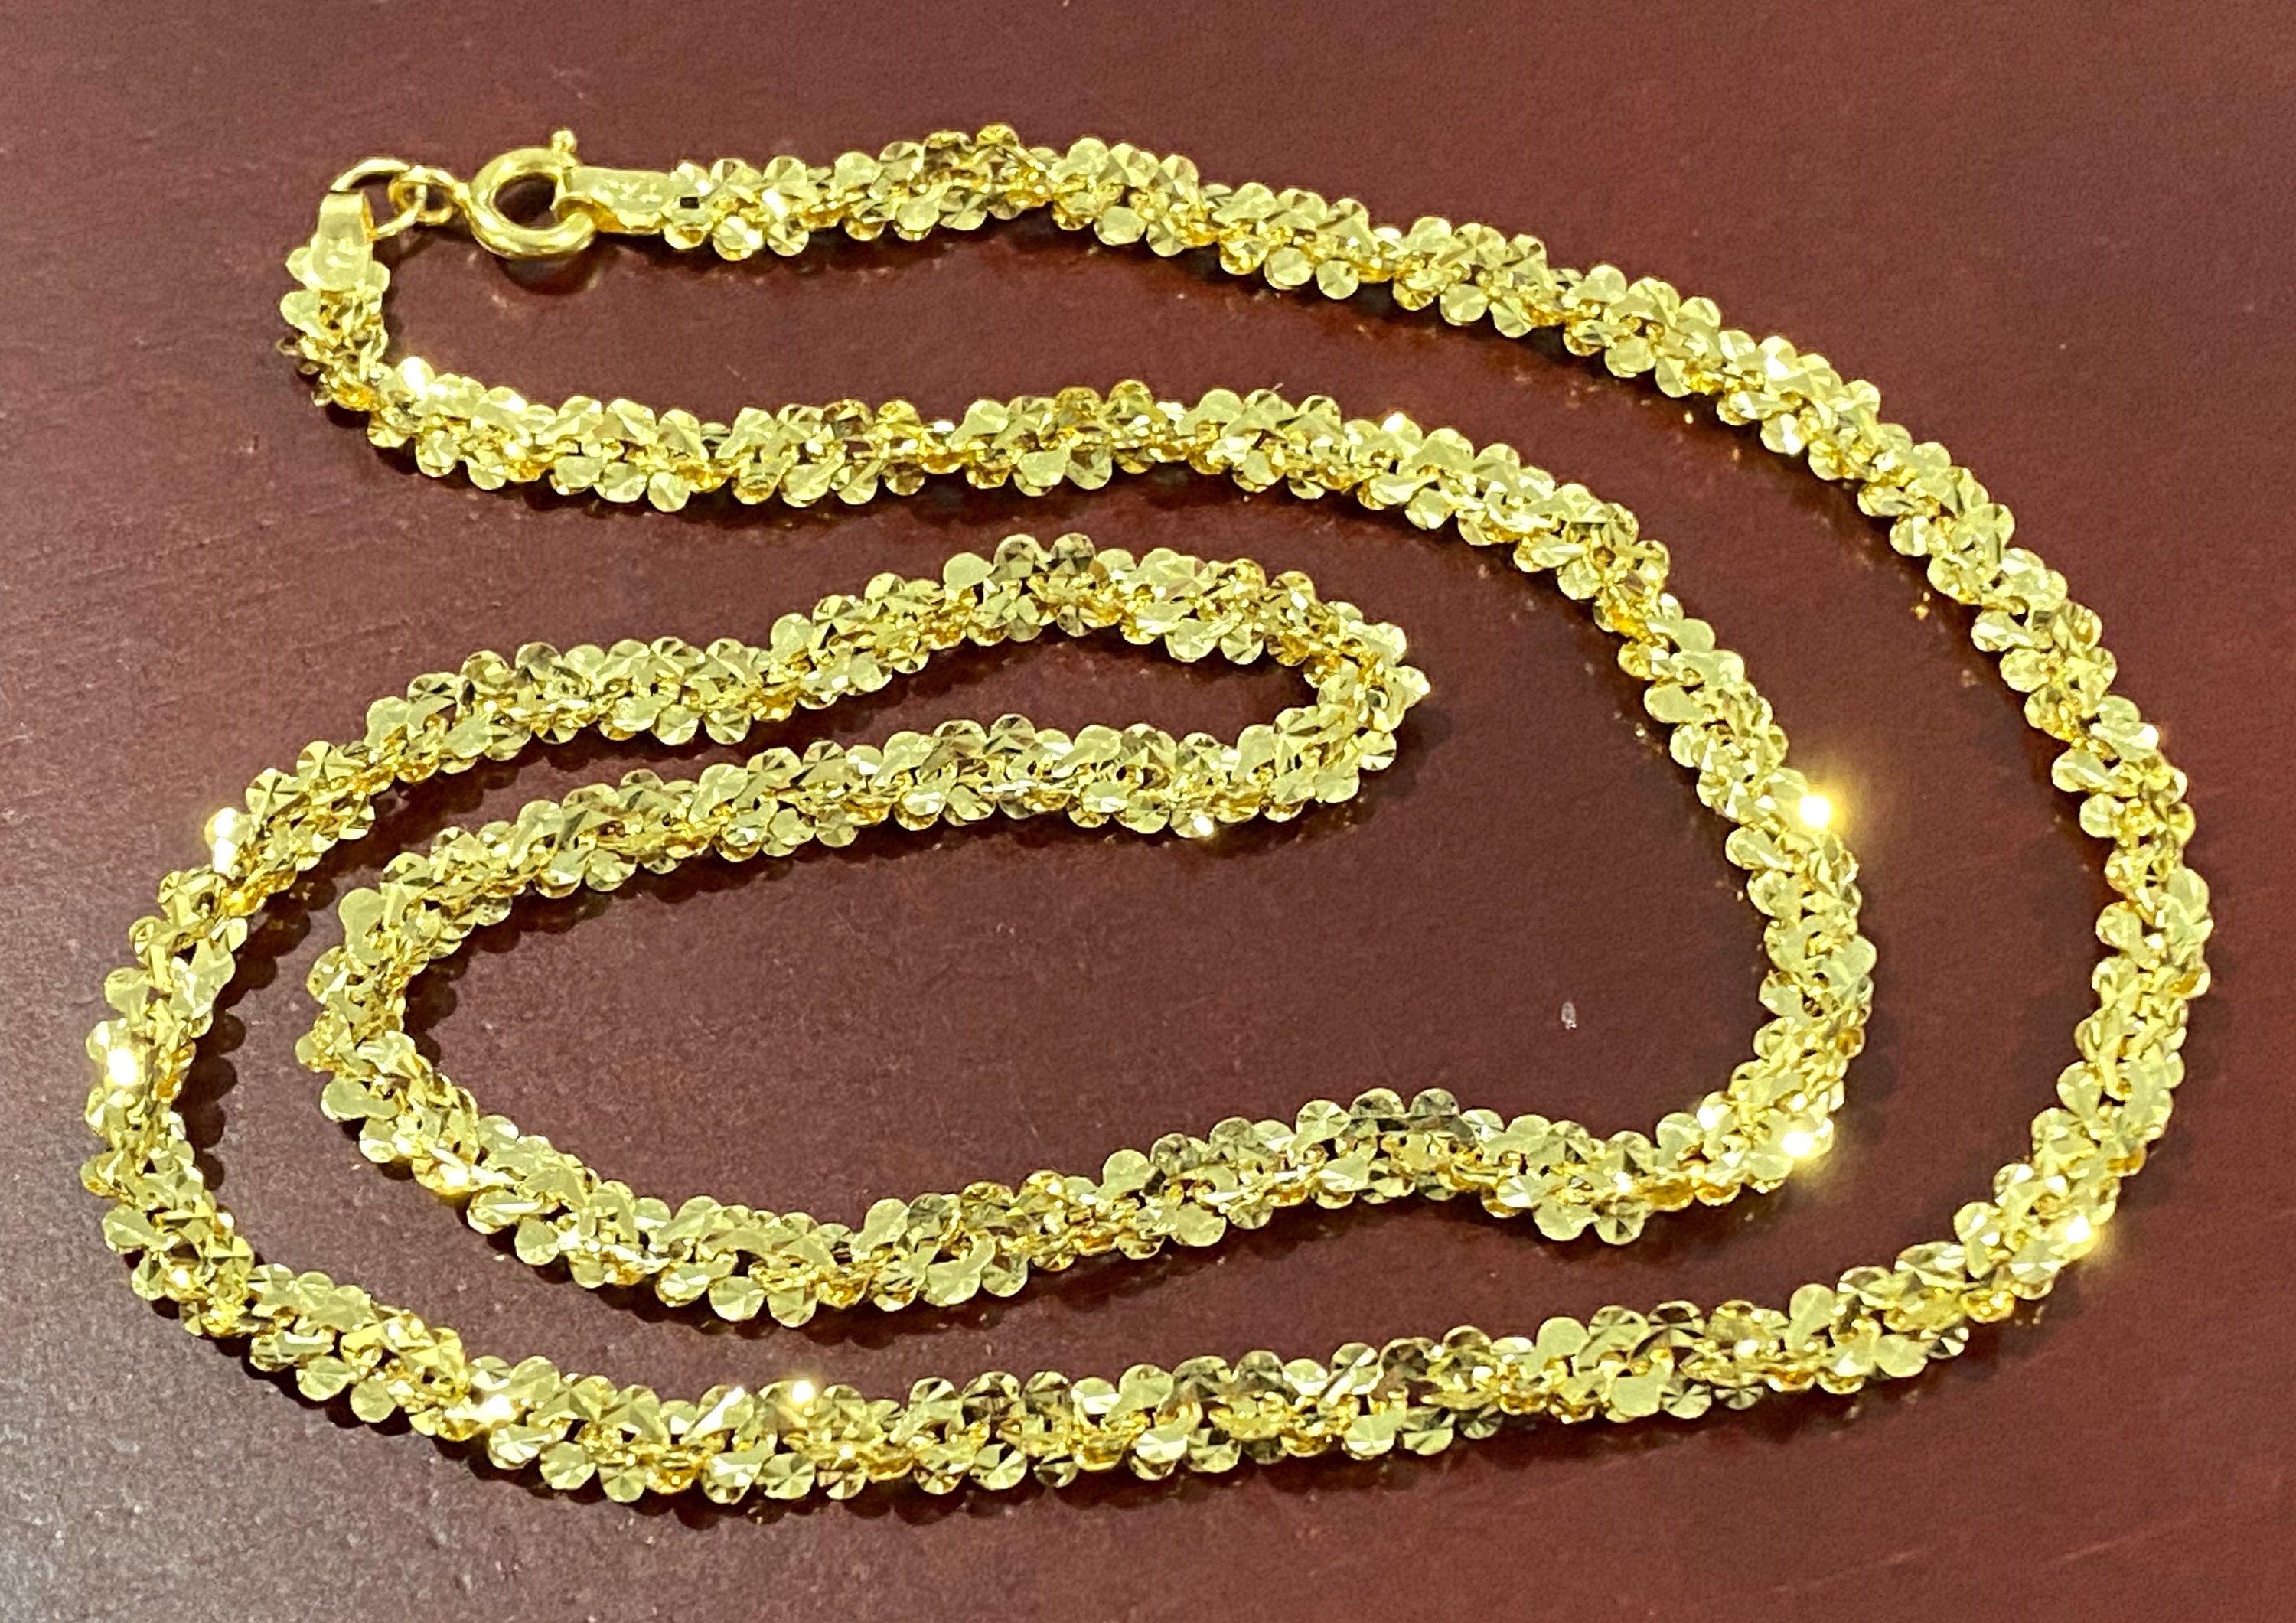 Solid 18K Gold Paperclip Necklace Bracelet 2mm 3.3mm, Genuine 18K Gold Chain, Ladies 18 Karat Gold Necklace, Ladies Gold Chain